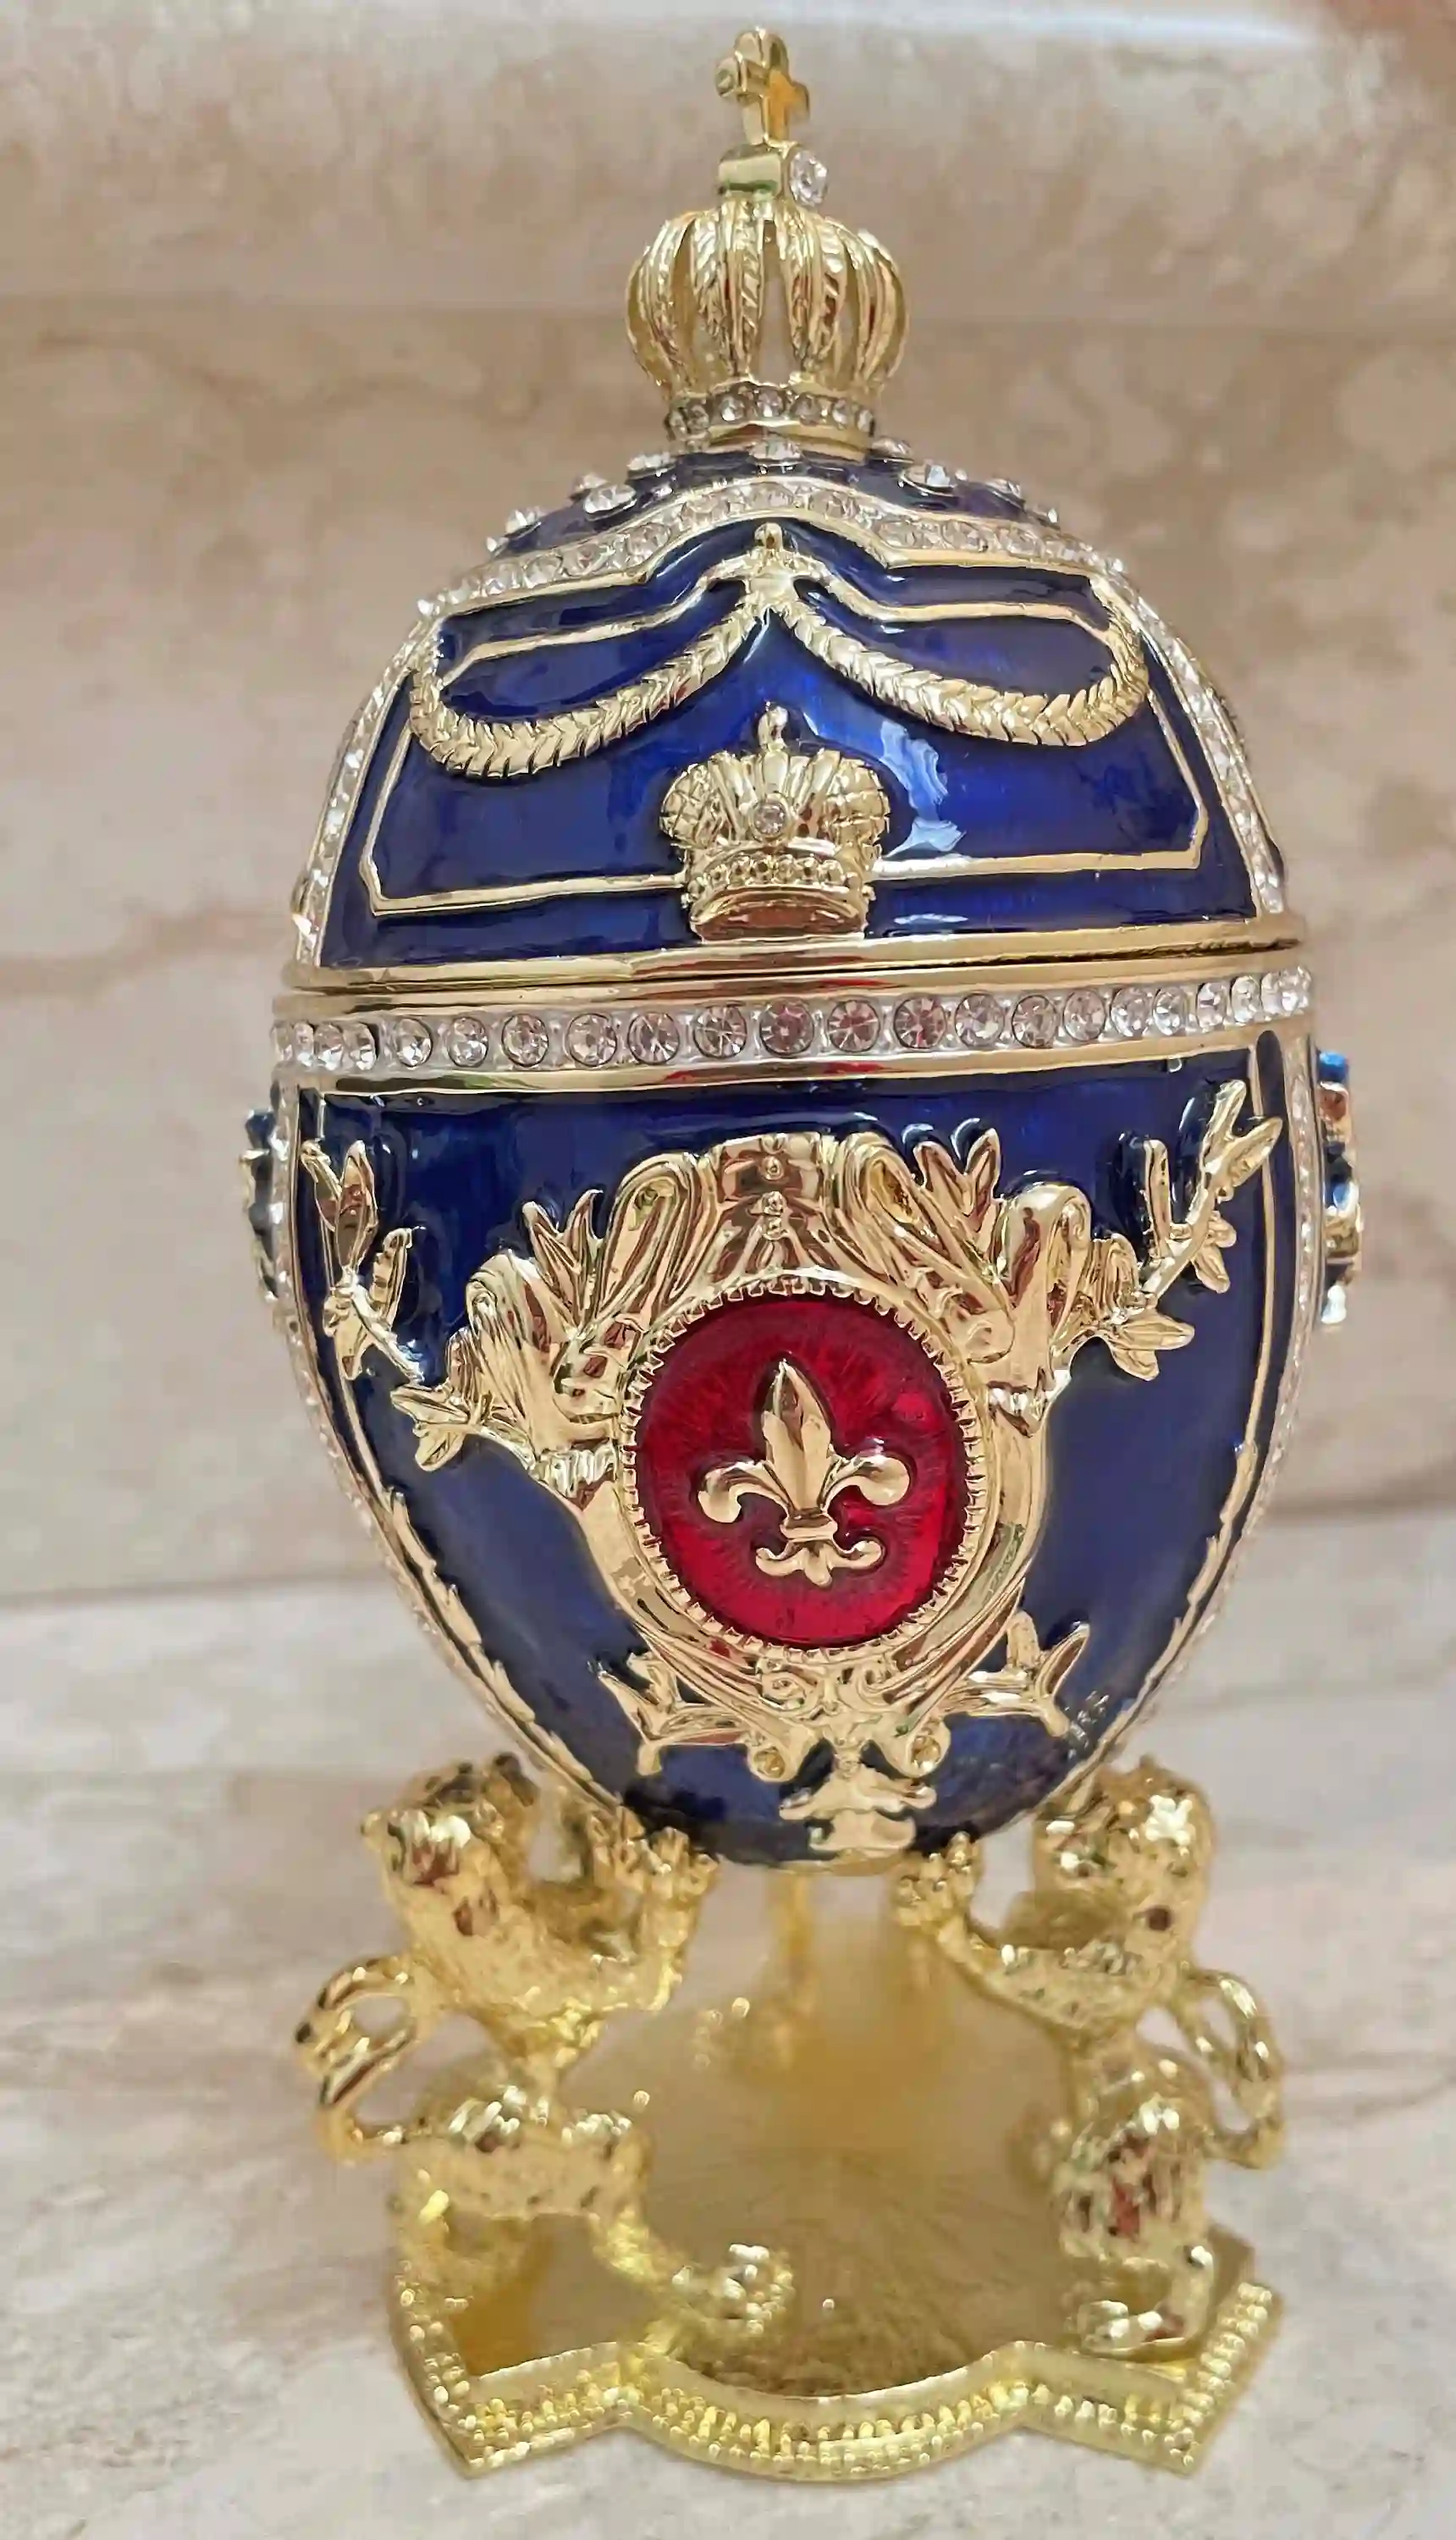 DESIGNER Blue Faberge egg Ornament, Faberge Egg Trinket Box, 24k GOLD Swarovski Diamond HANDSET, Faberge egg Style Graduation gift for Son 